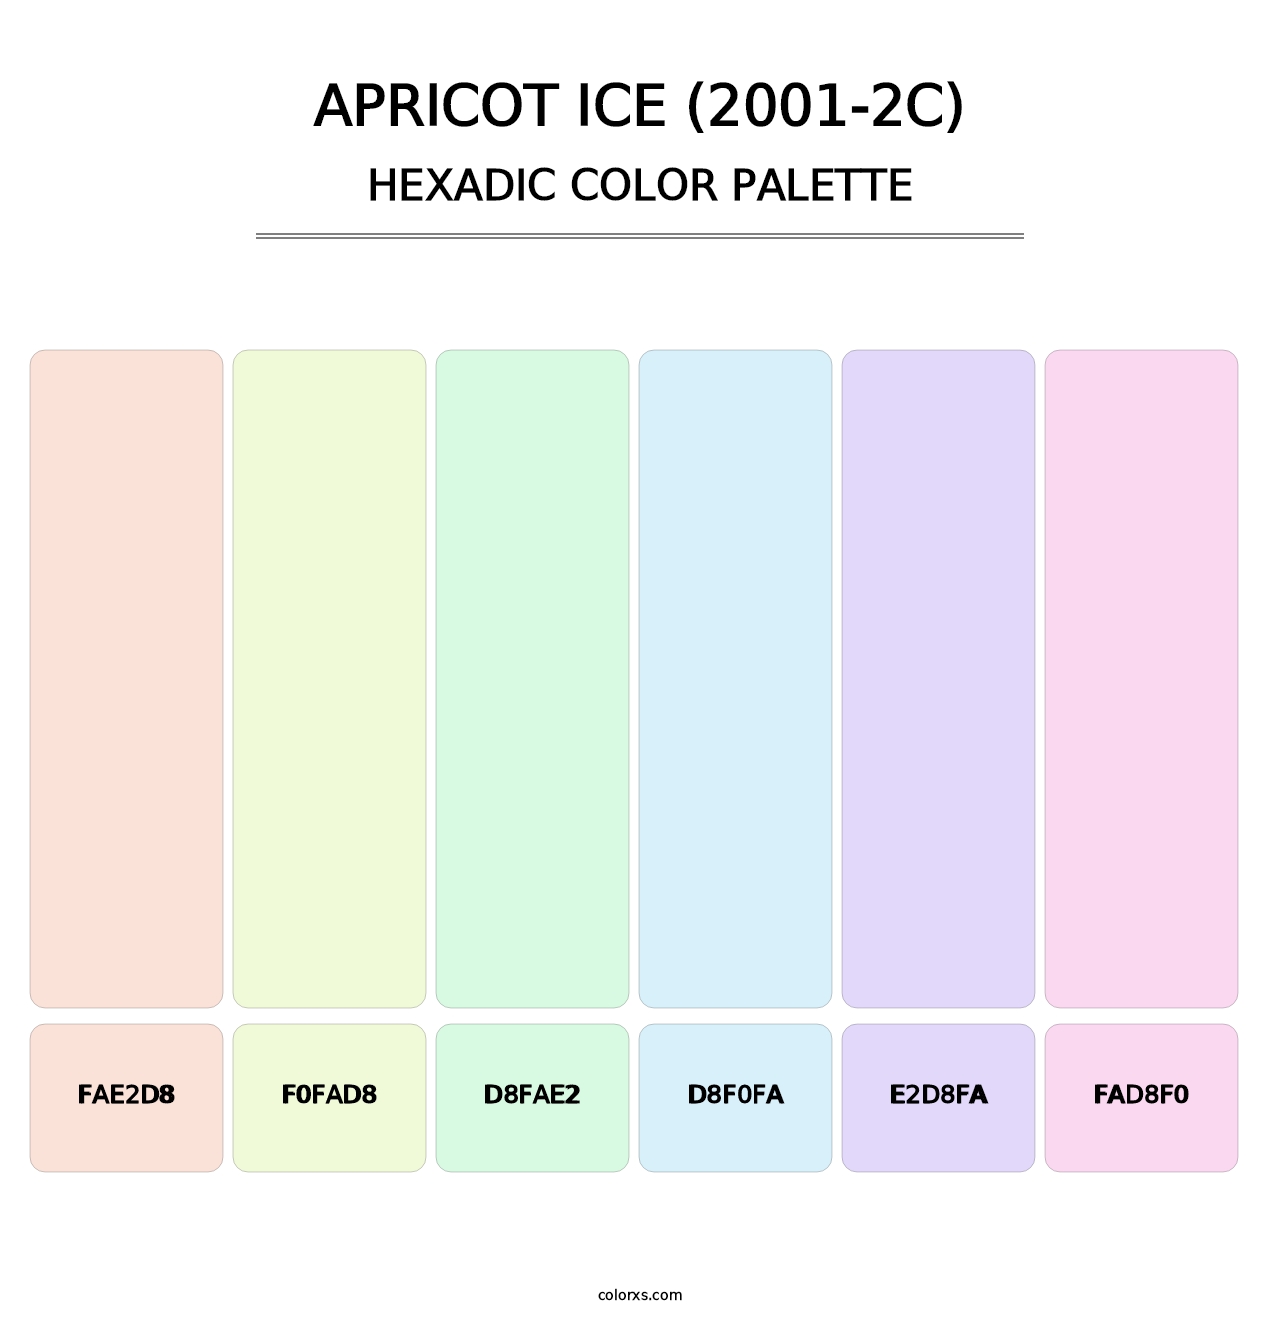 Apricot Ice (2001-2C) - Hexadic Color Palette